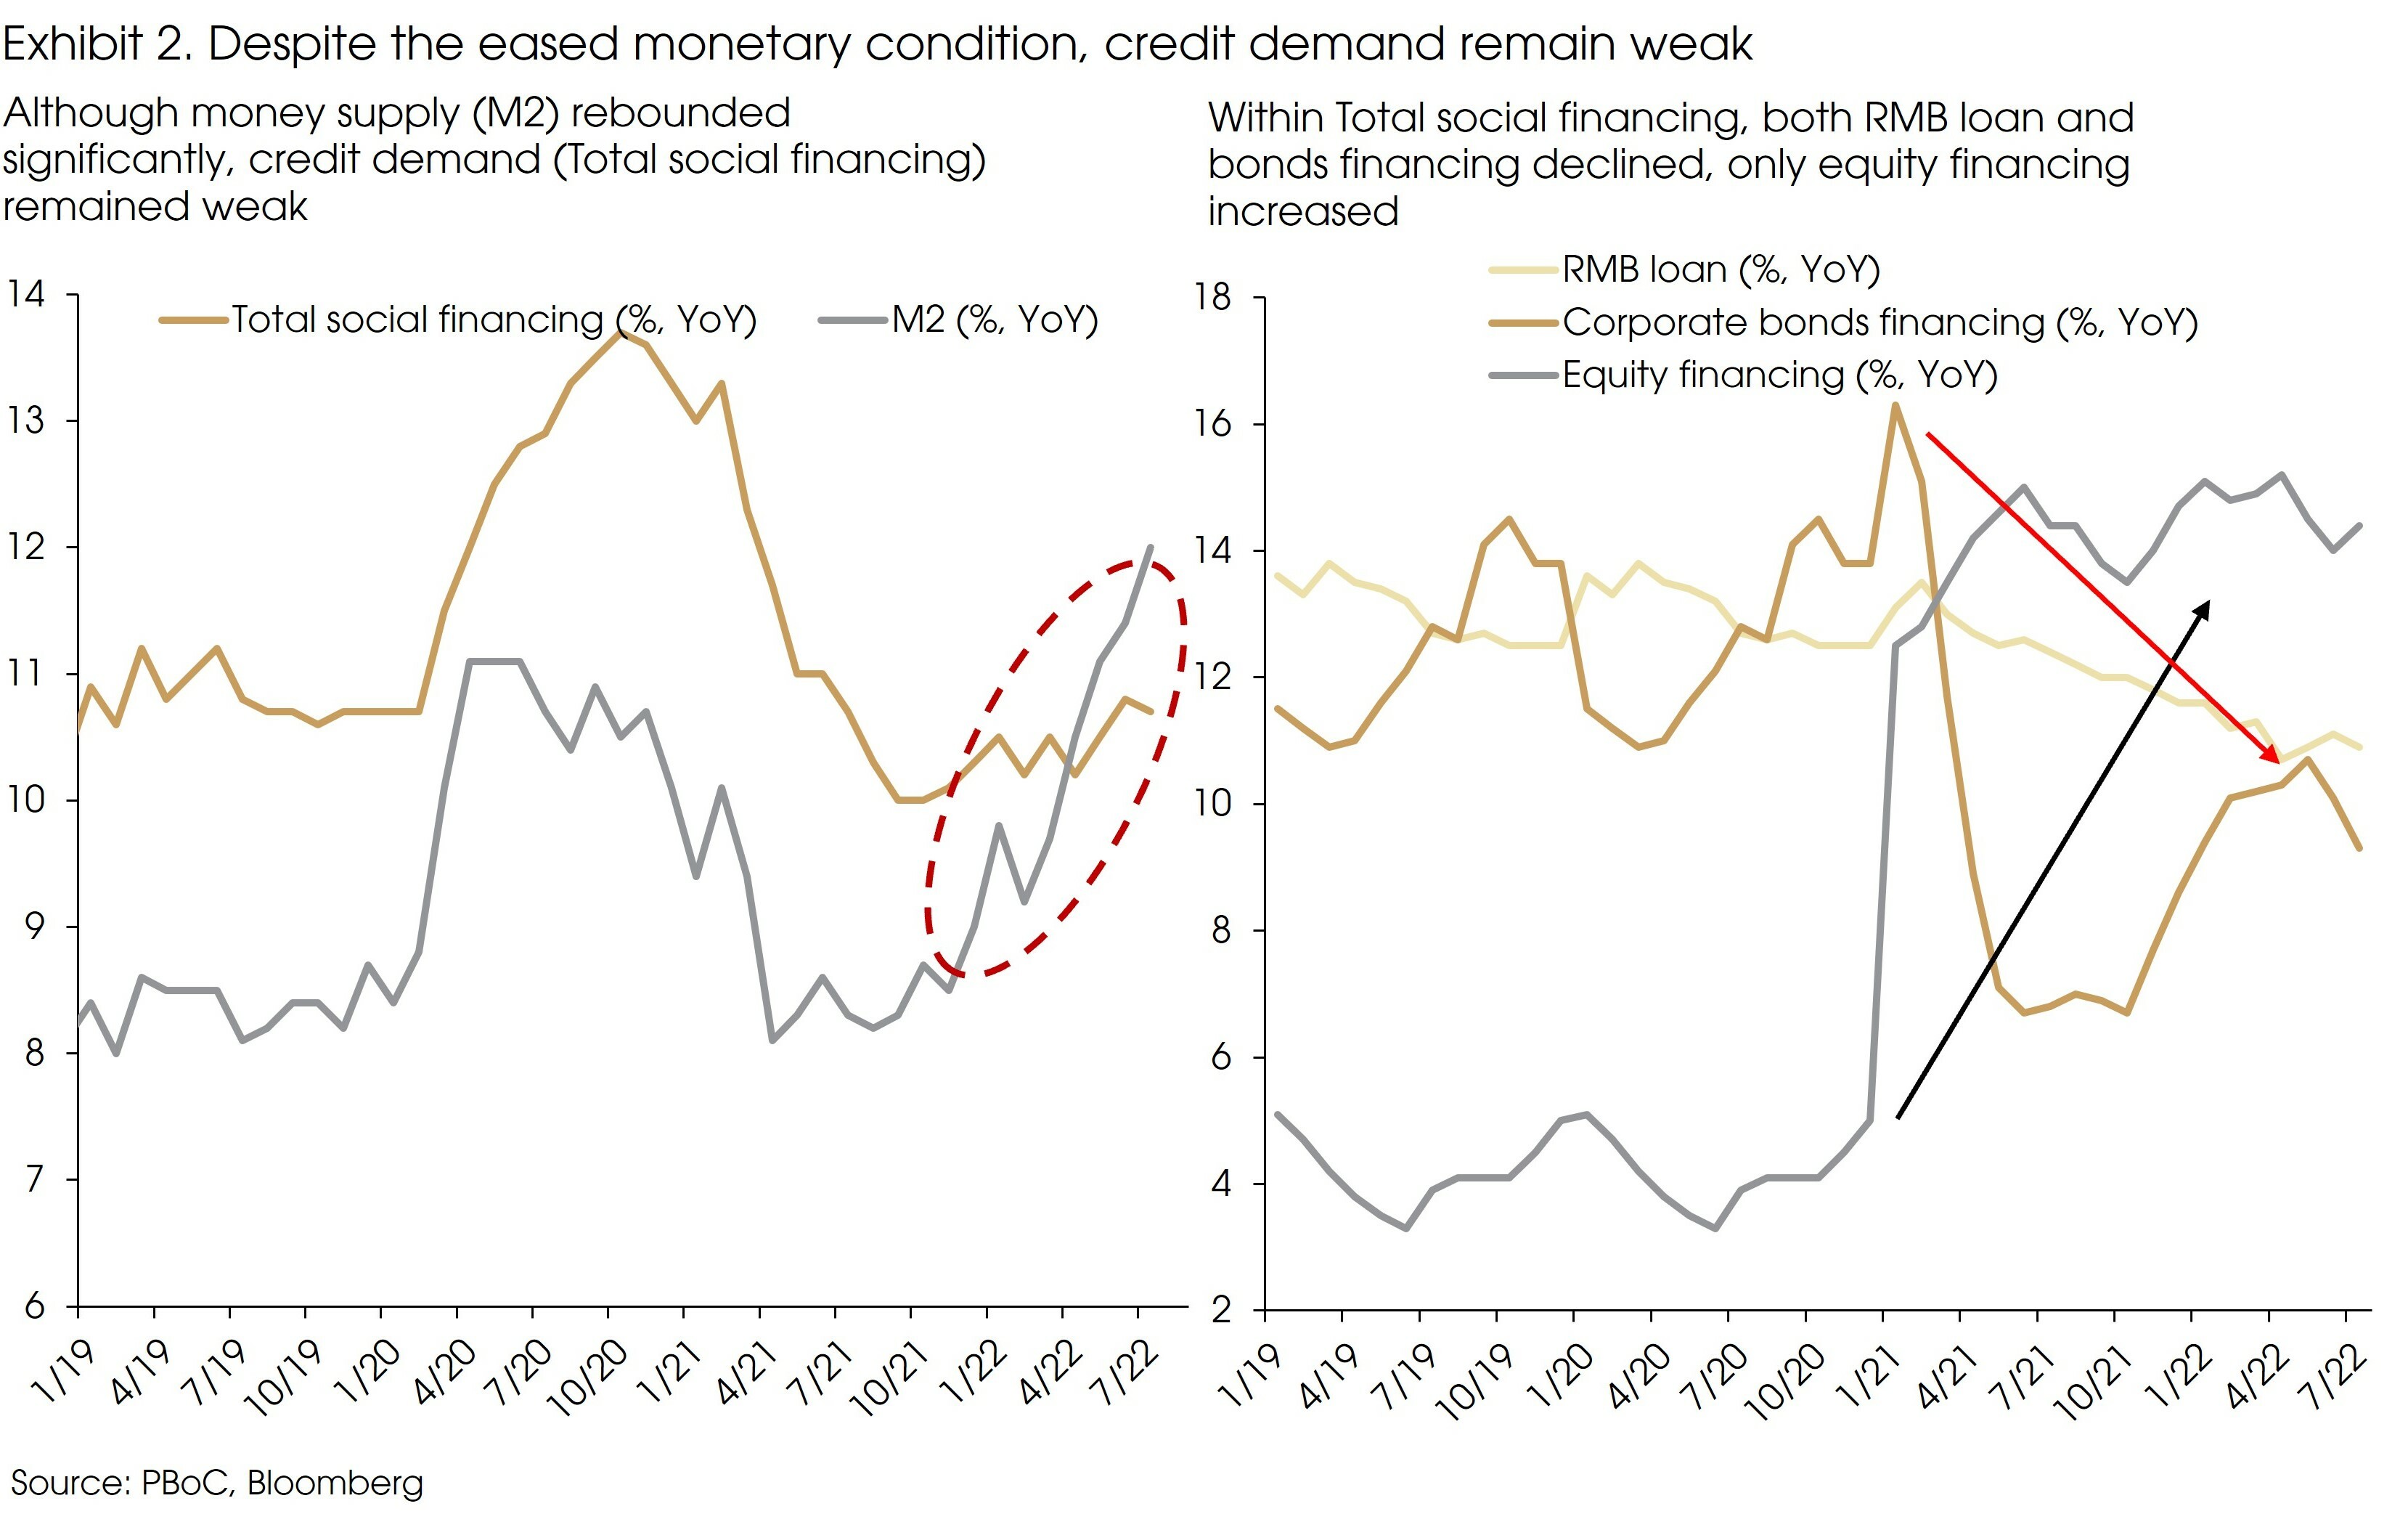 Exhibit 2 Despite the Eased Monetary Condition Credit Demand Remains Weak